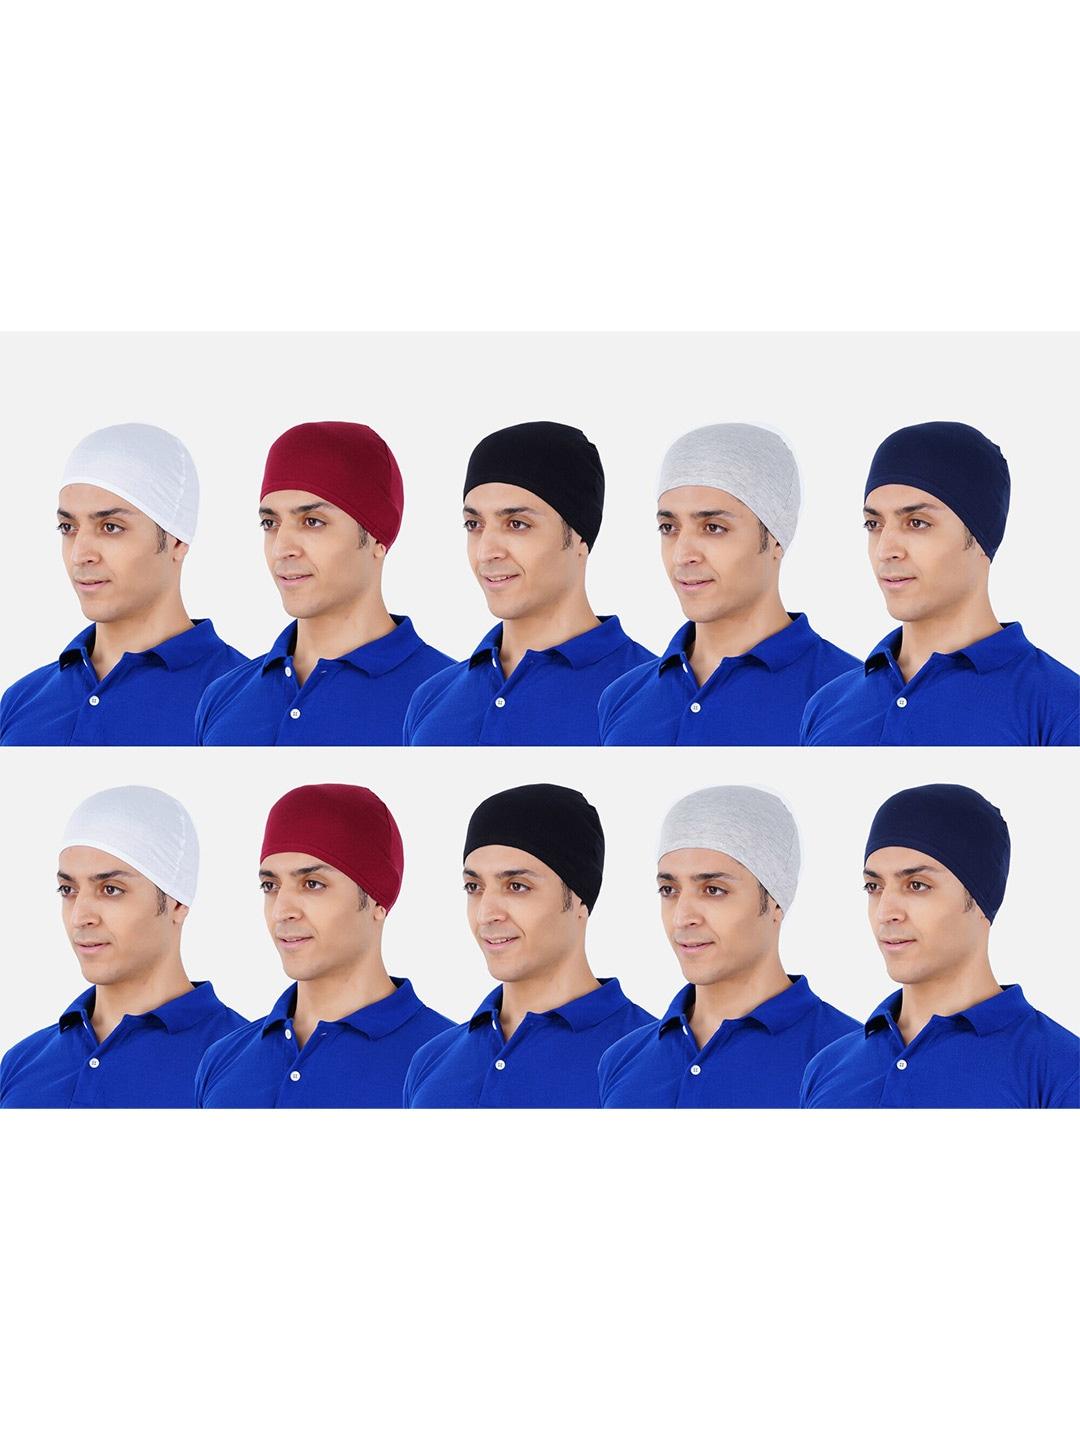 pride apparel men set of 10 white & red pure cotton skull cap